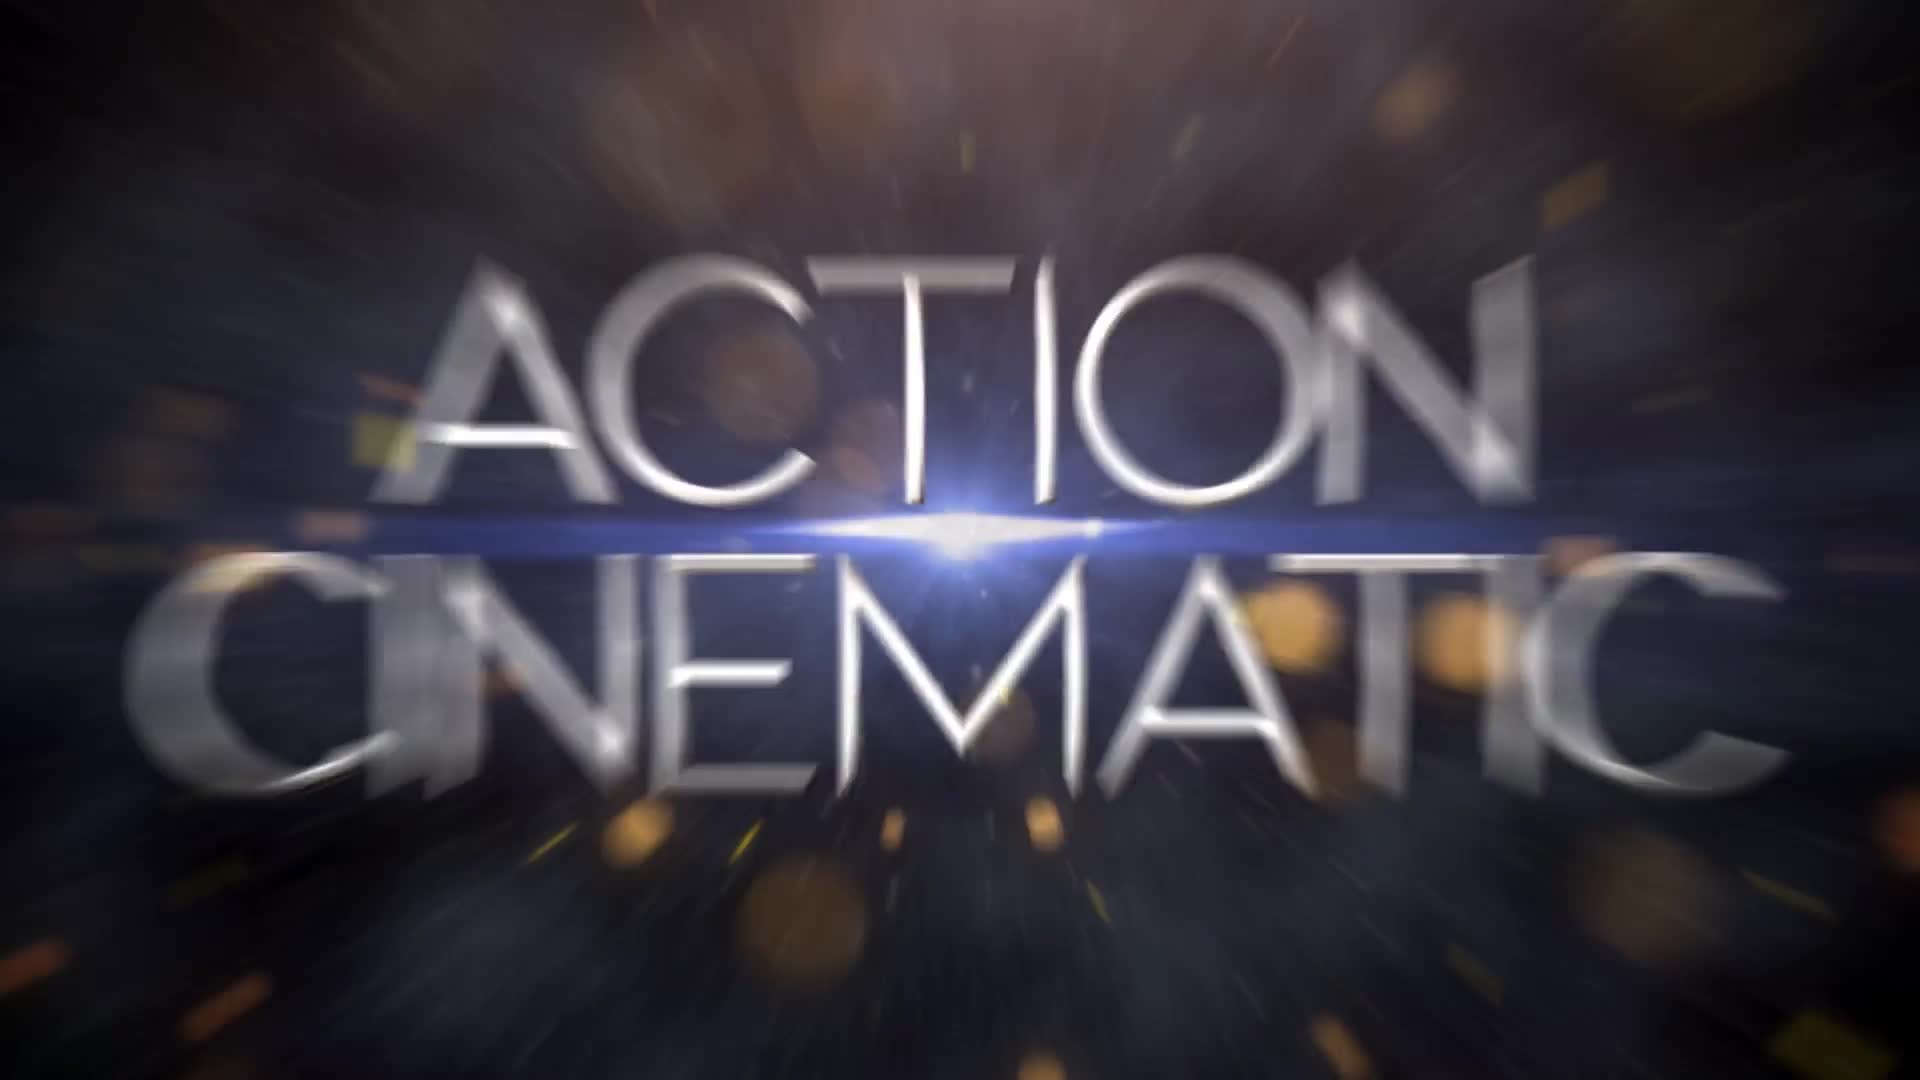 Action Cinematic Trailer Premiere Pro Videohive 24601825 Premiere Pro Image 9